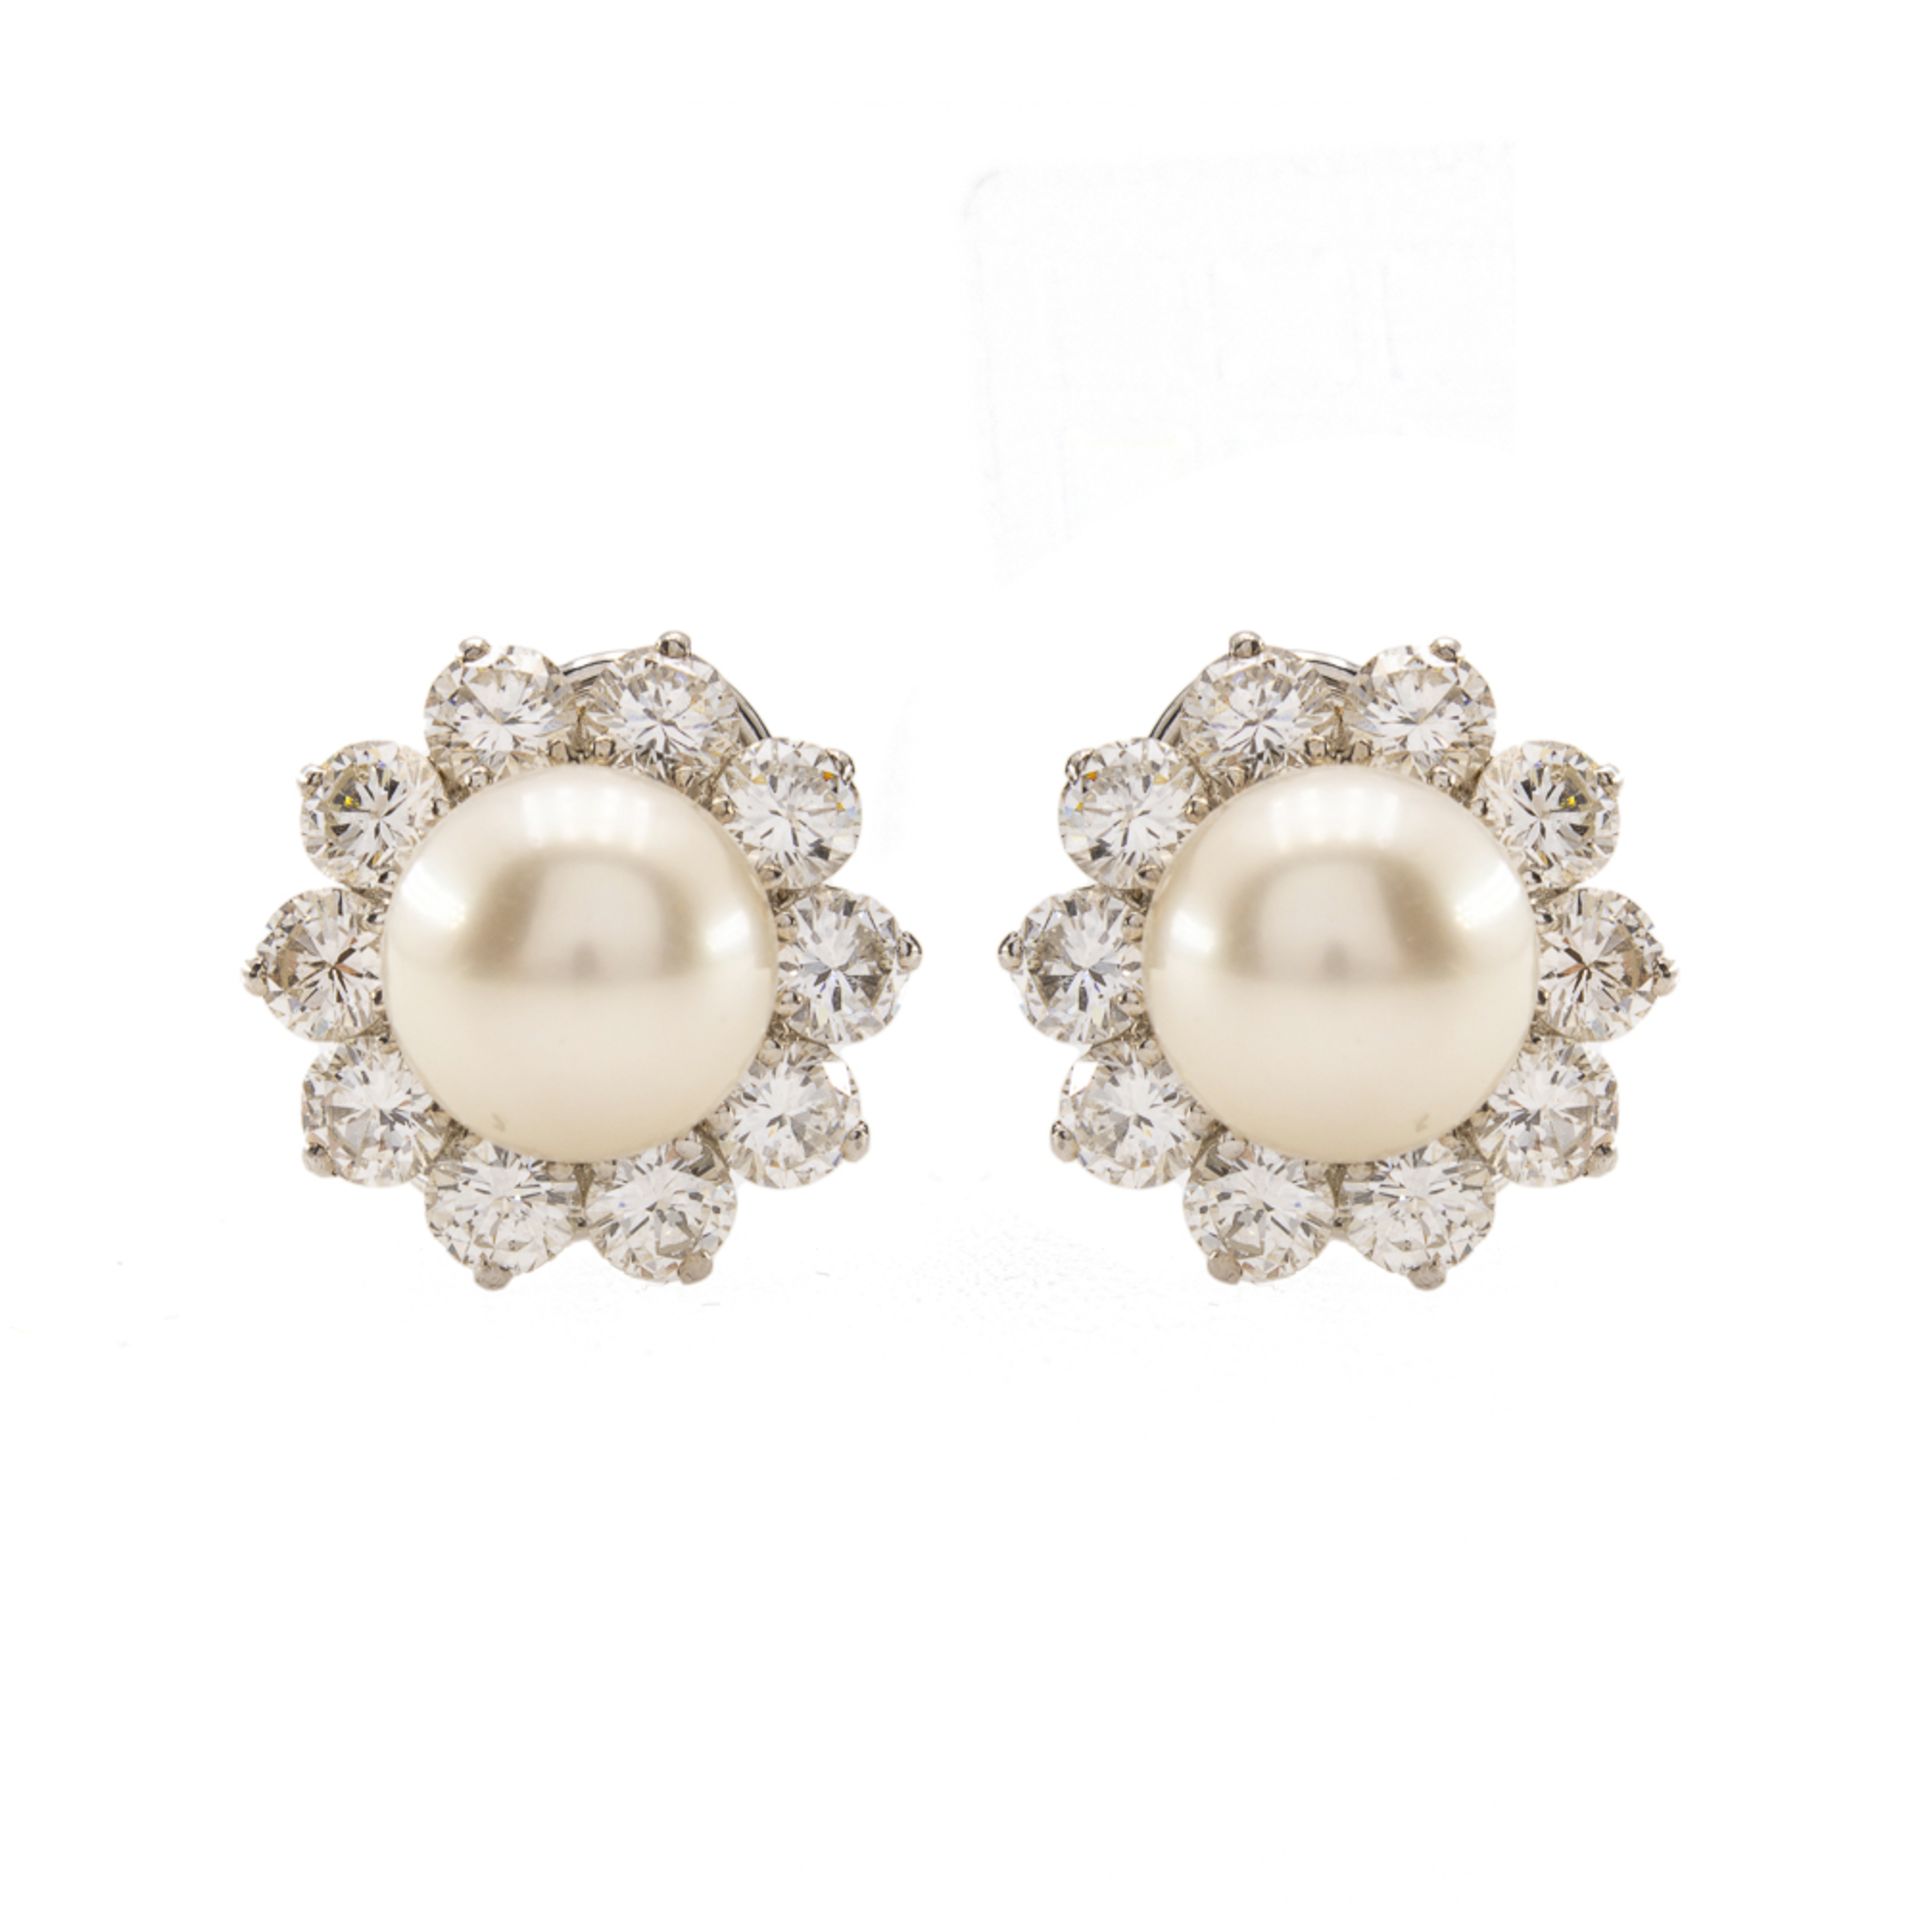 18kt white gold pearl and diamond lobe earrings